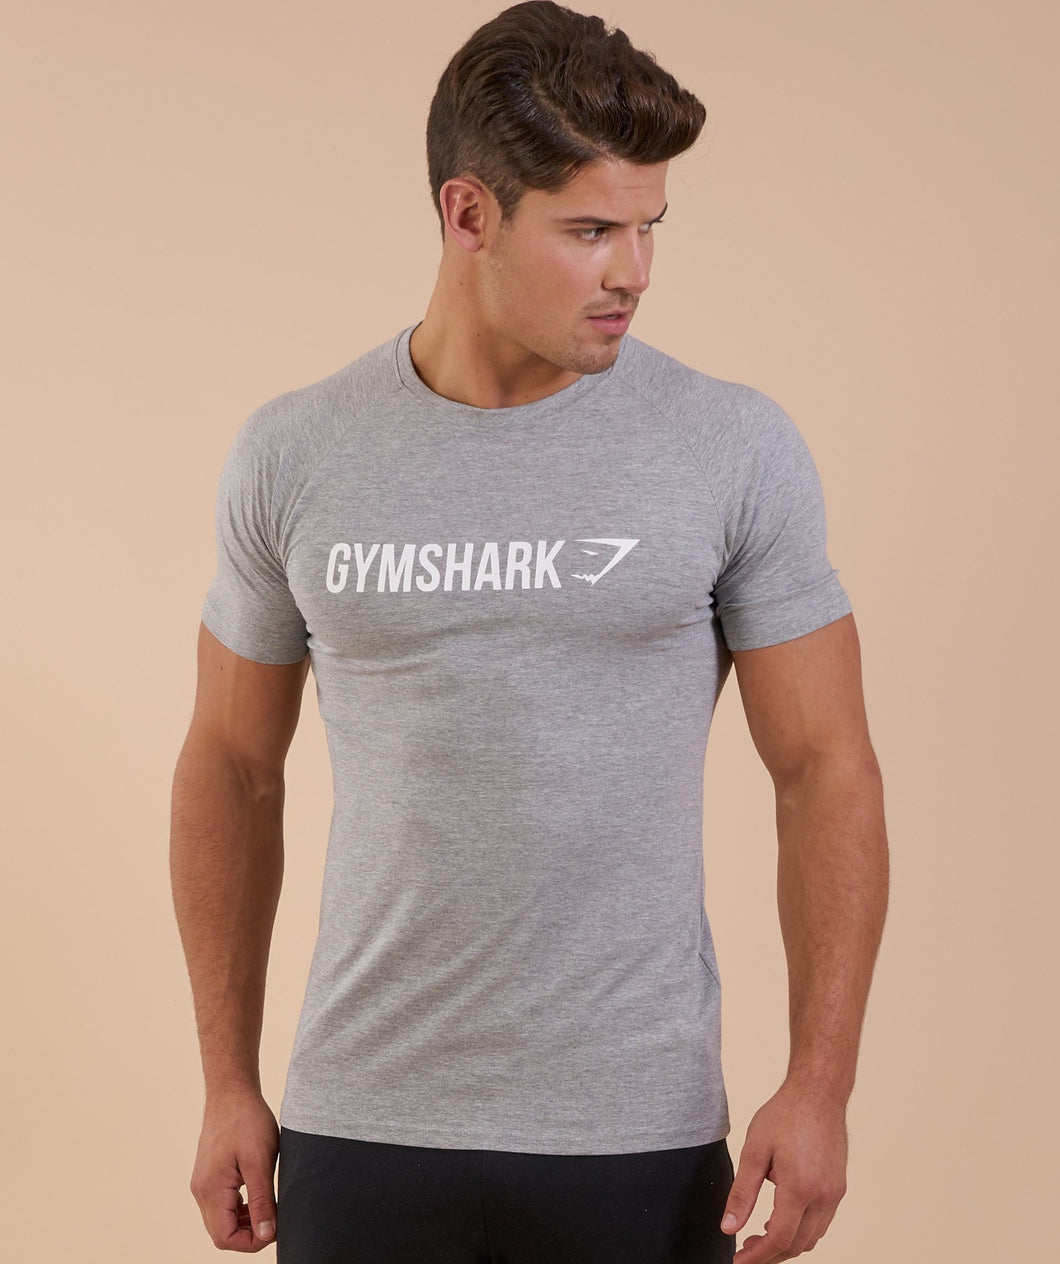 Gymshark Apollo T-Shirt - tekshop.no